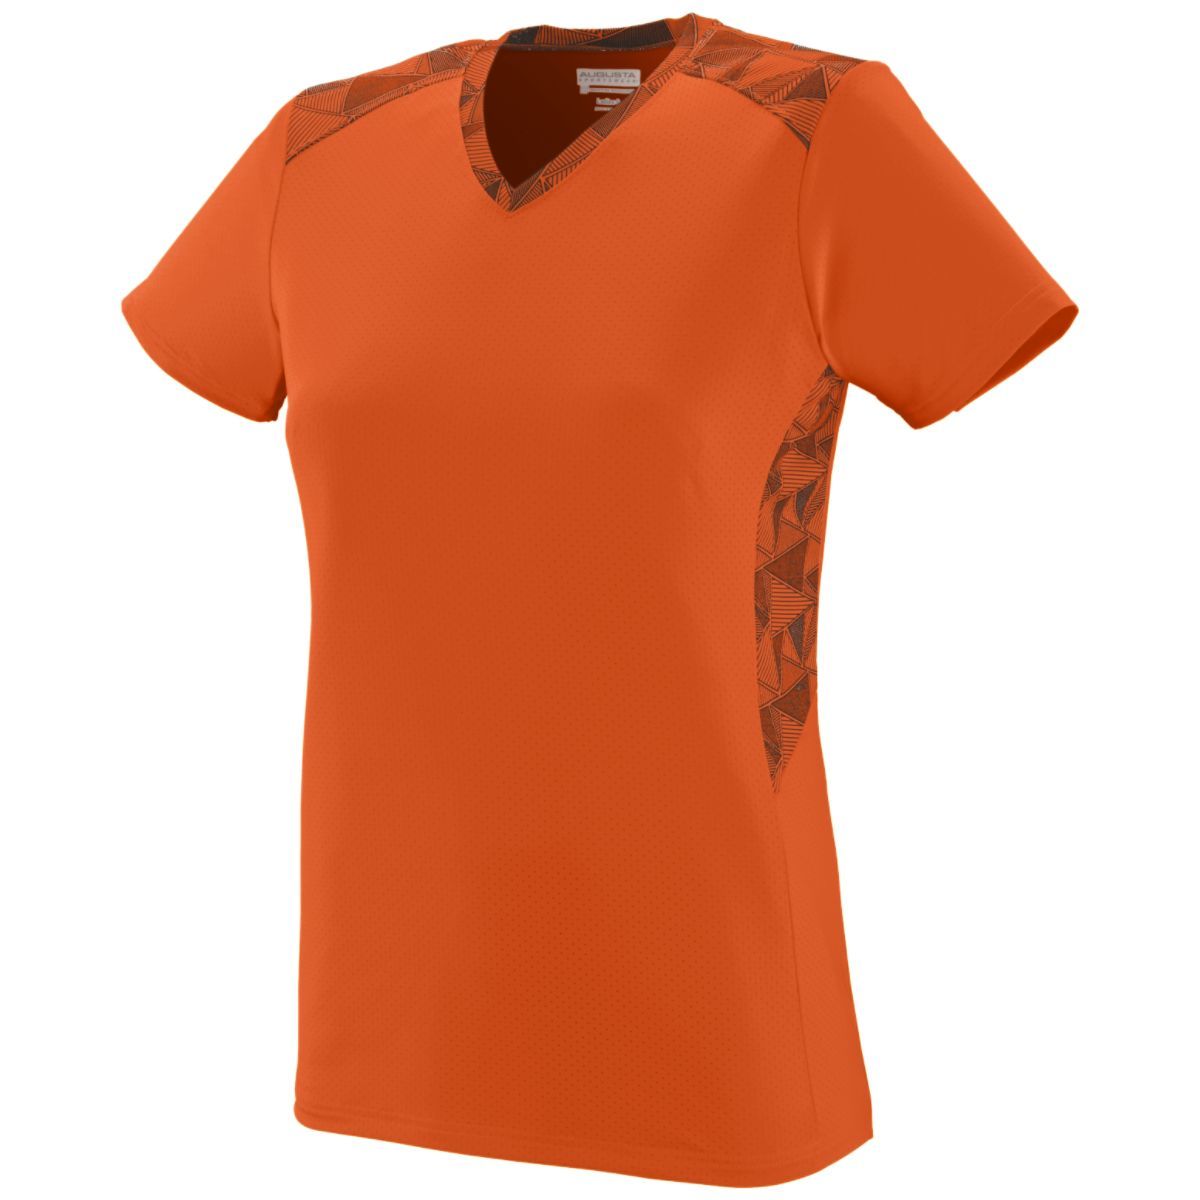 Augusta Sportswear Ladies Vigorous Jersey in Orange/Orange/Black Print  -Part of the Ladies, Ladies-Jersey, Augusta-Products, Softball, Shirts product lines at KanaleyCreations.com